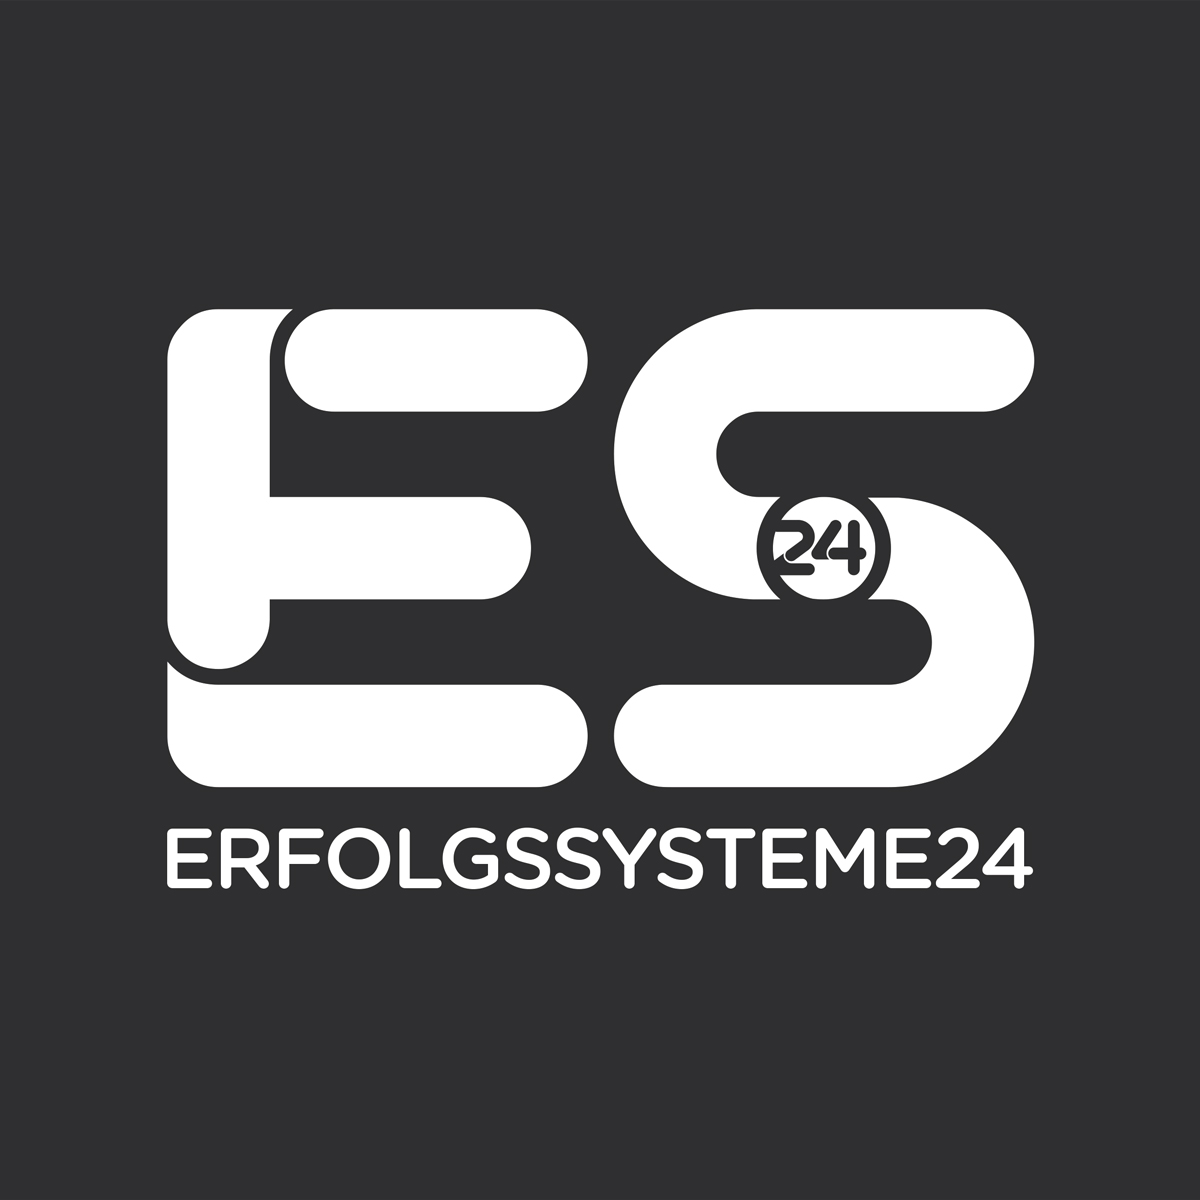 ERFOLGSSYSTEME 24 UG